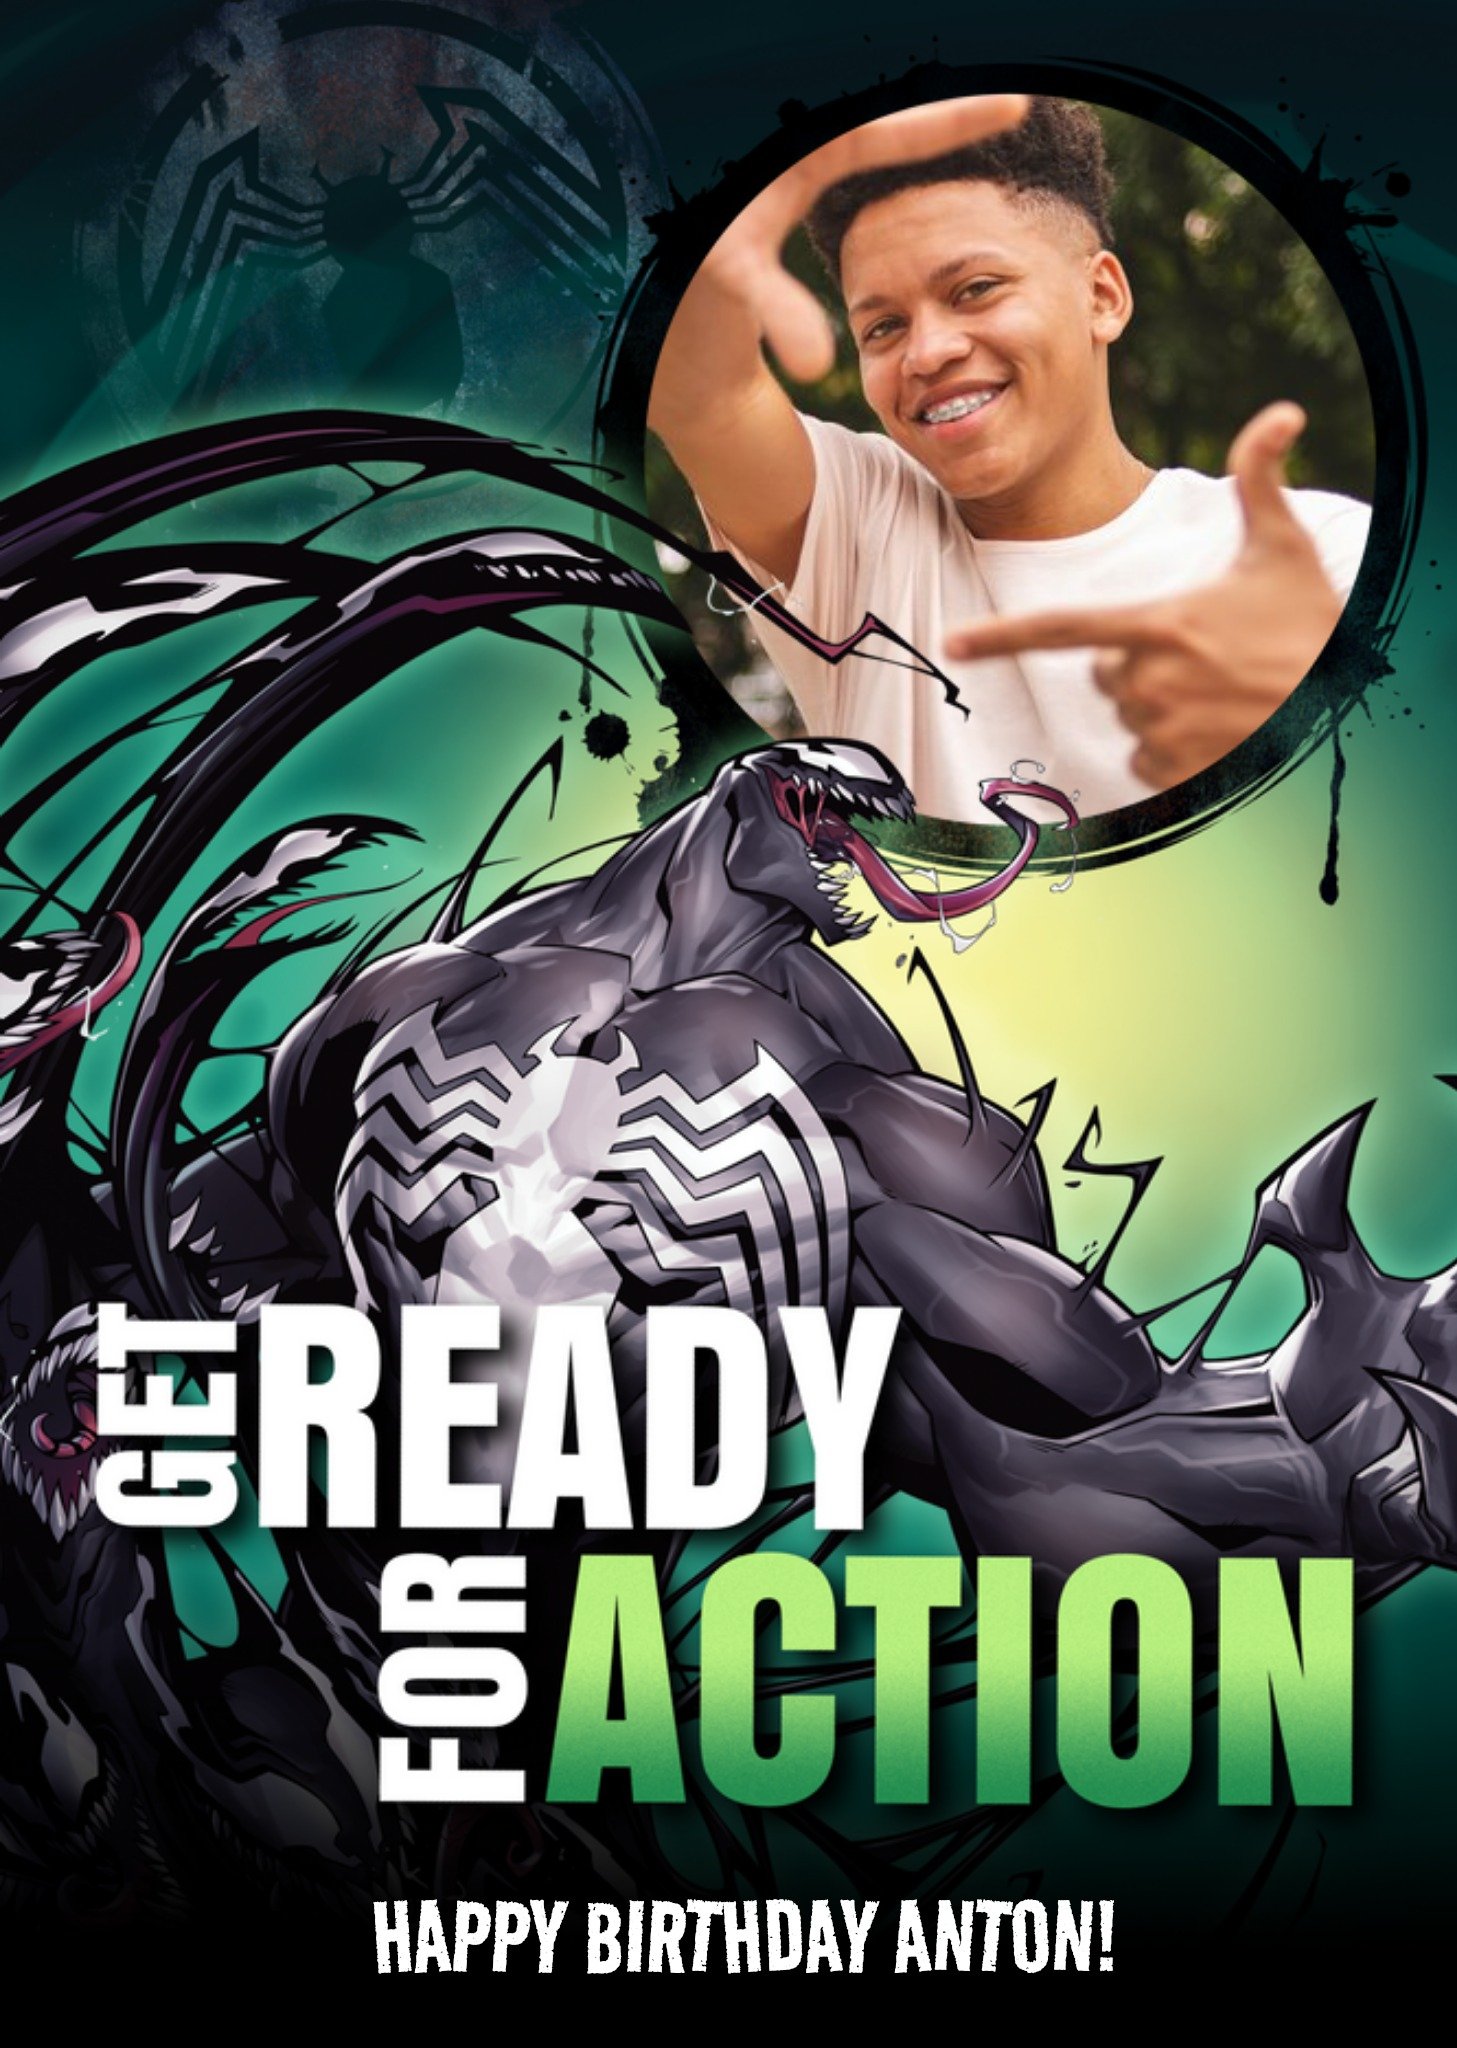 Marvel Venom Get Ready For Action Photo Upload Birthday Card Ecard